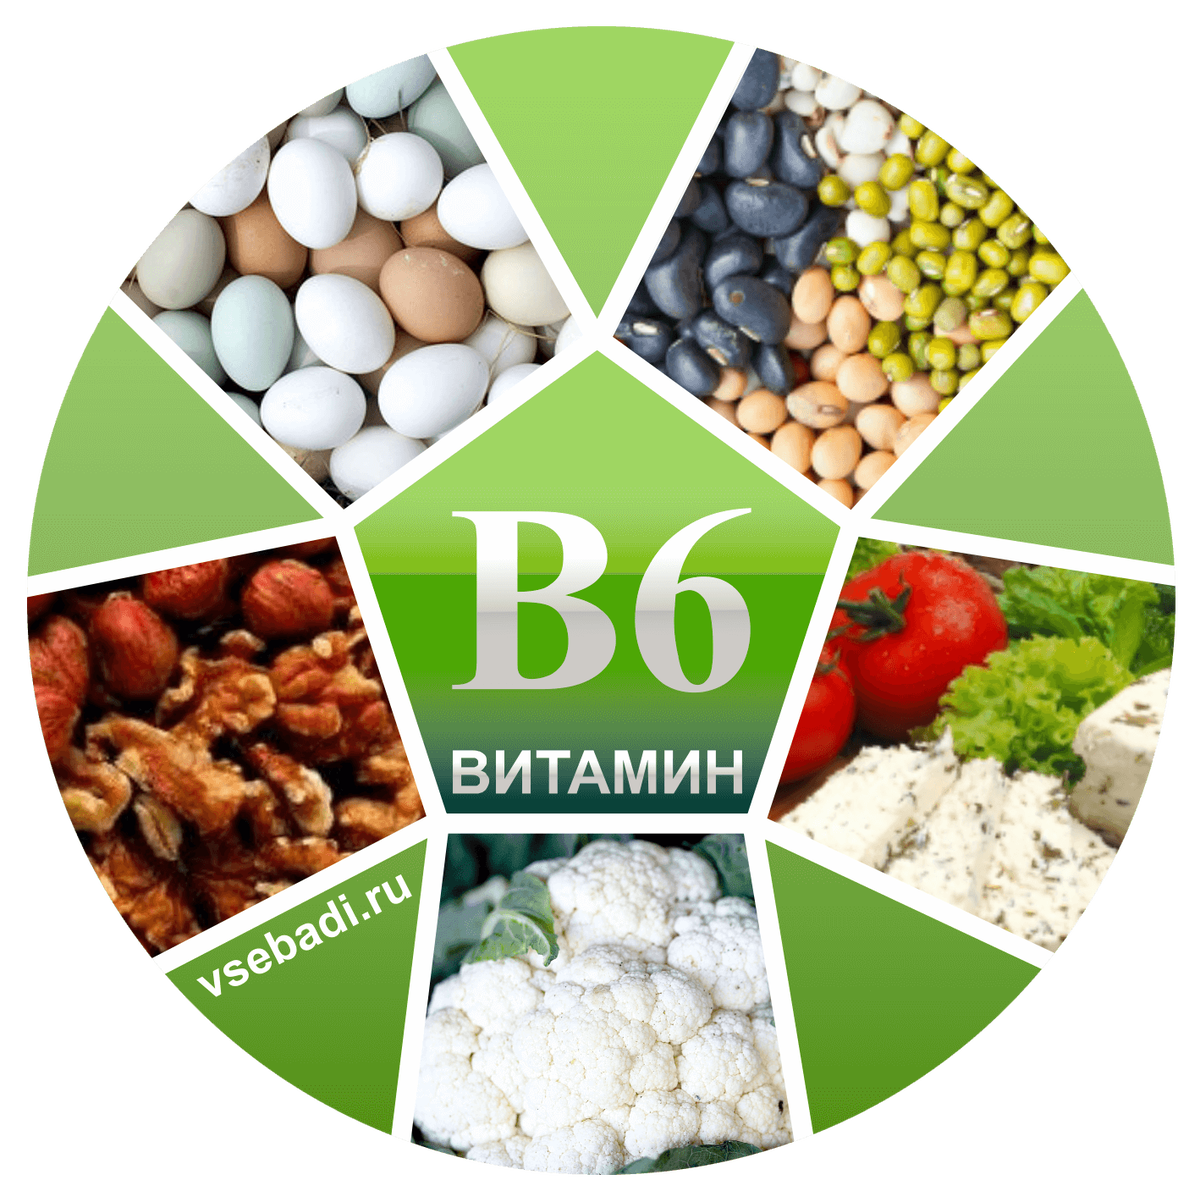 Витамин b6 название витамина. Витамины группы б6. Витамин b6 пиридоксин. Витамин b6 источники витамина. Б6 в сутки